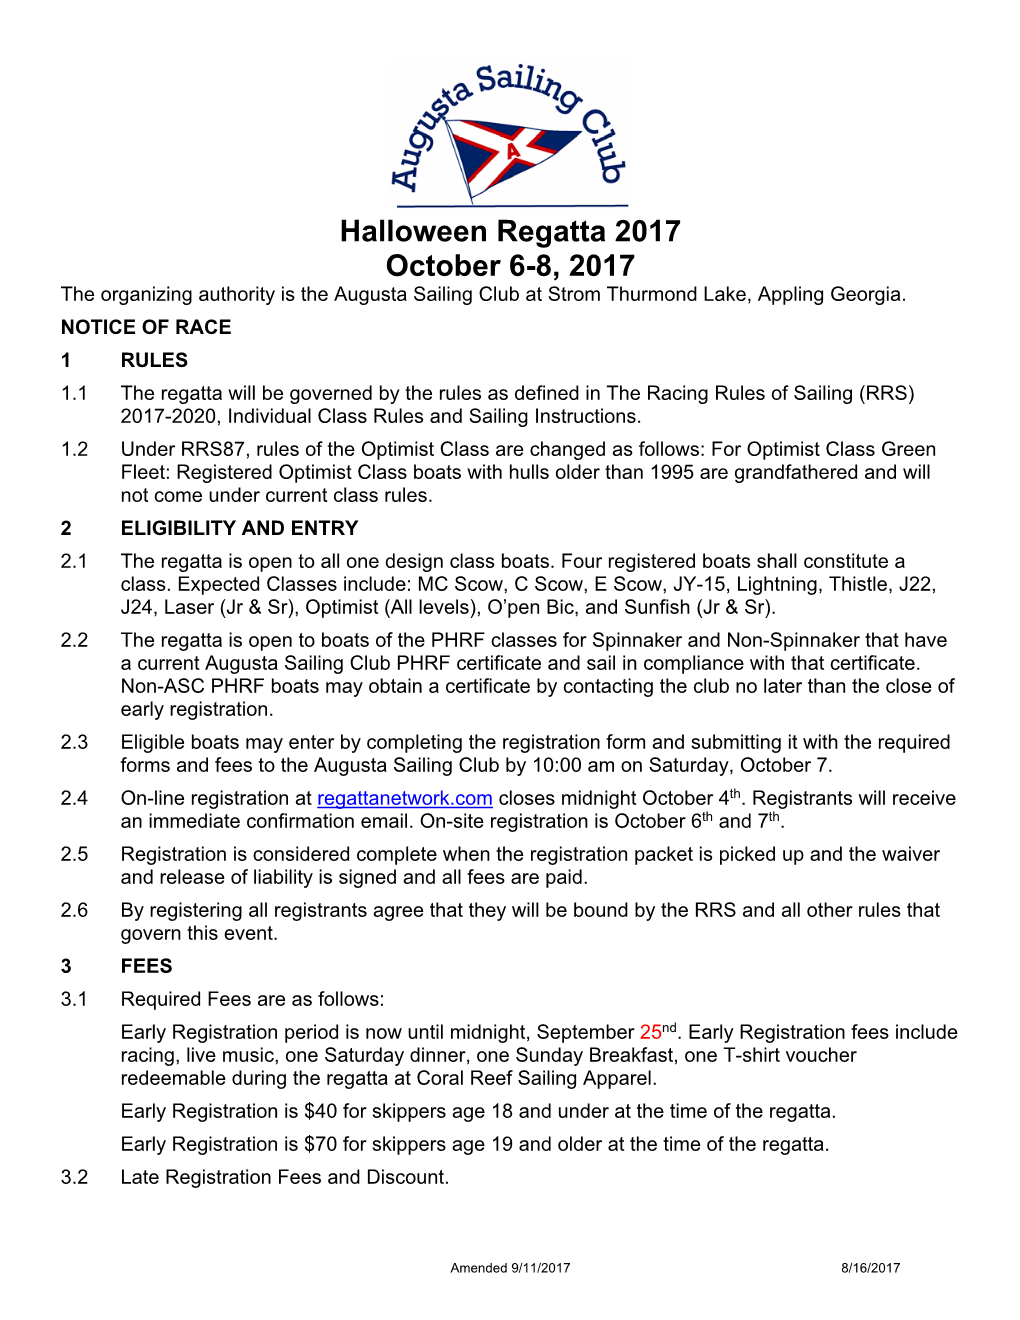 Halloween Regatta 2017 October 6-8, 2017 the Organizing Authority Is the Augusta Sailing Club at Strom Thurmond Lake, Appling Georgia